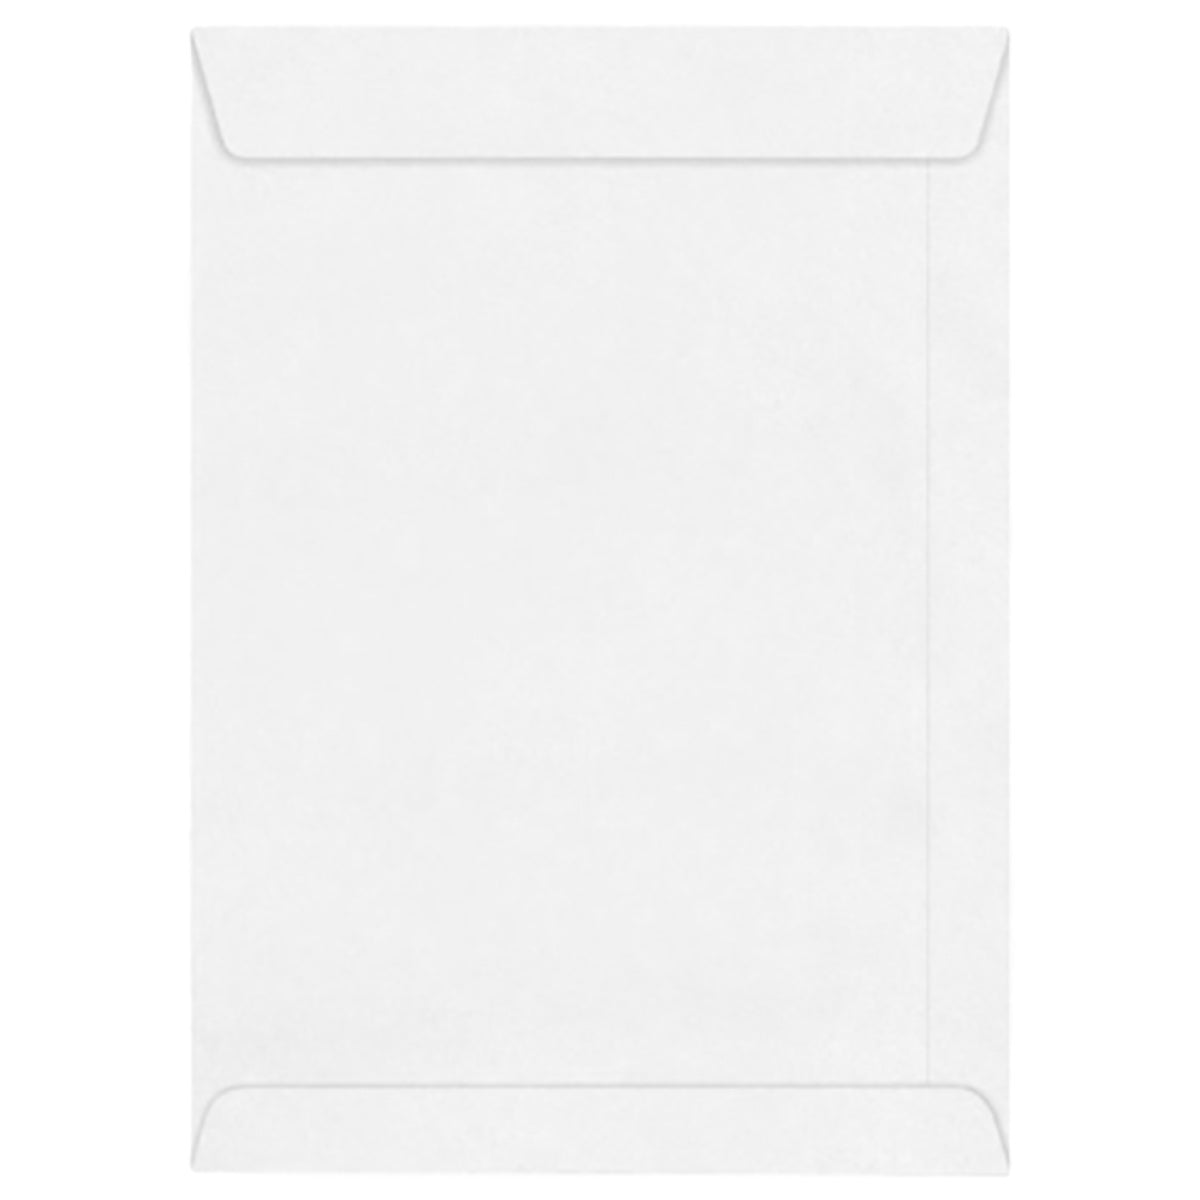 Hispapel Envelope 381 x 254 mm, 15 x 10 inches, 100gsm, White